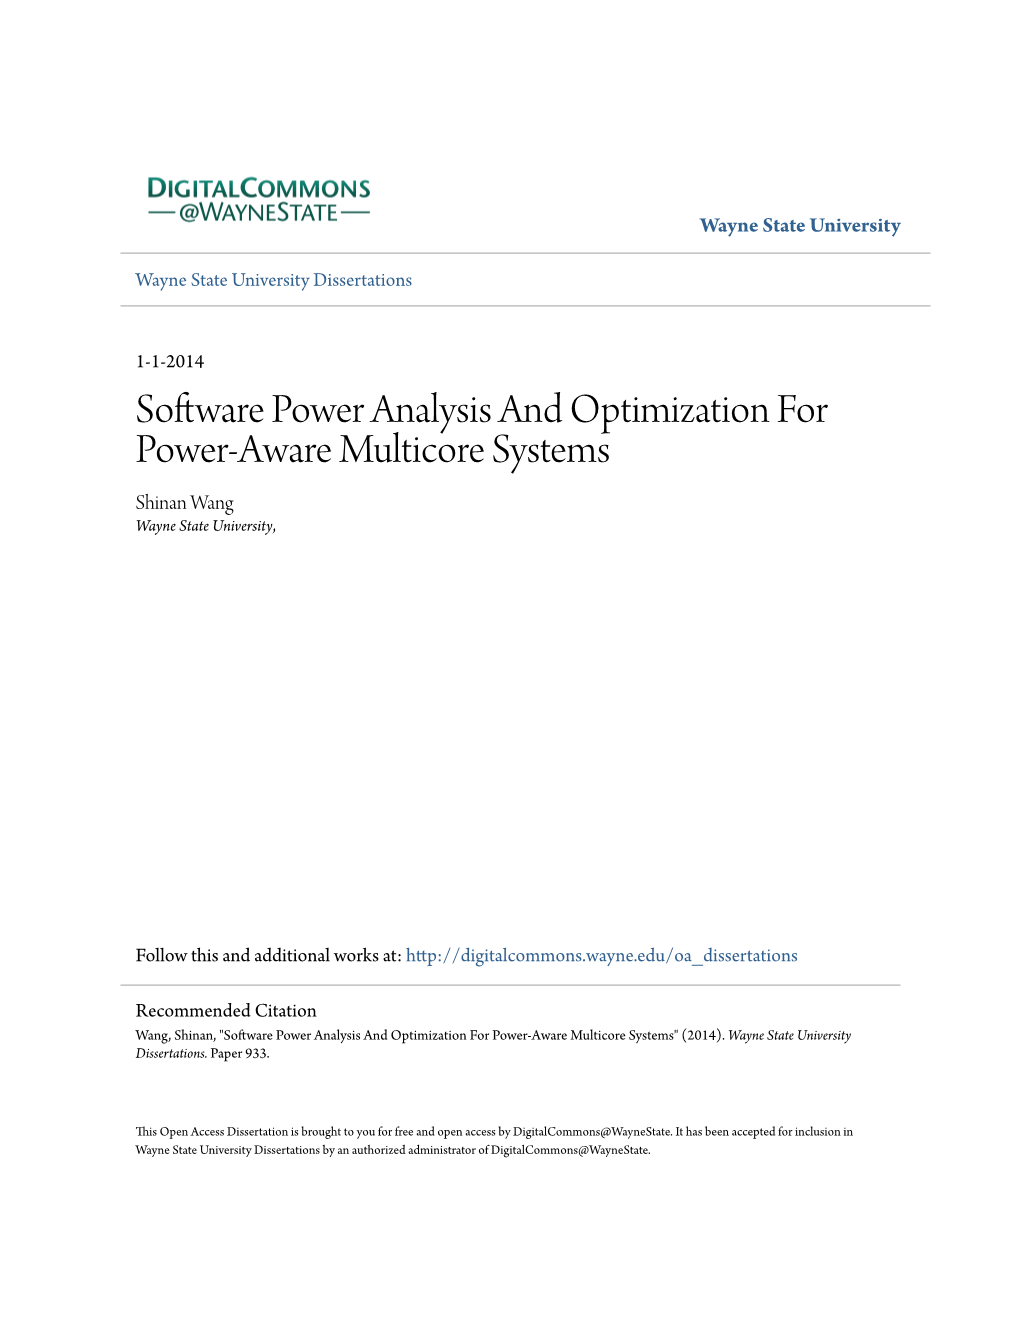 Software Power Analysis and Optimization for Power-Aware Multicore Systems Shinan Wang Wayne State University